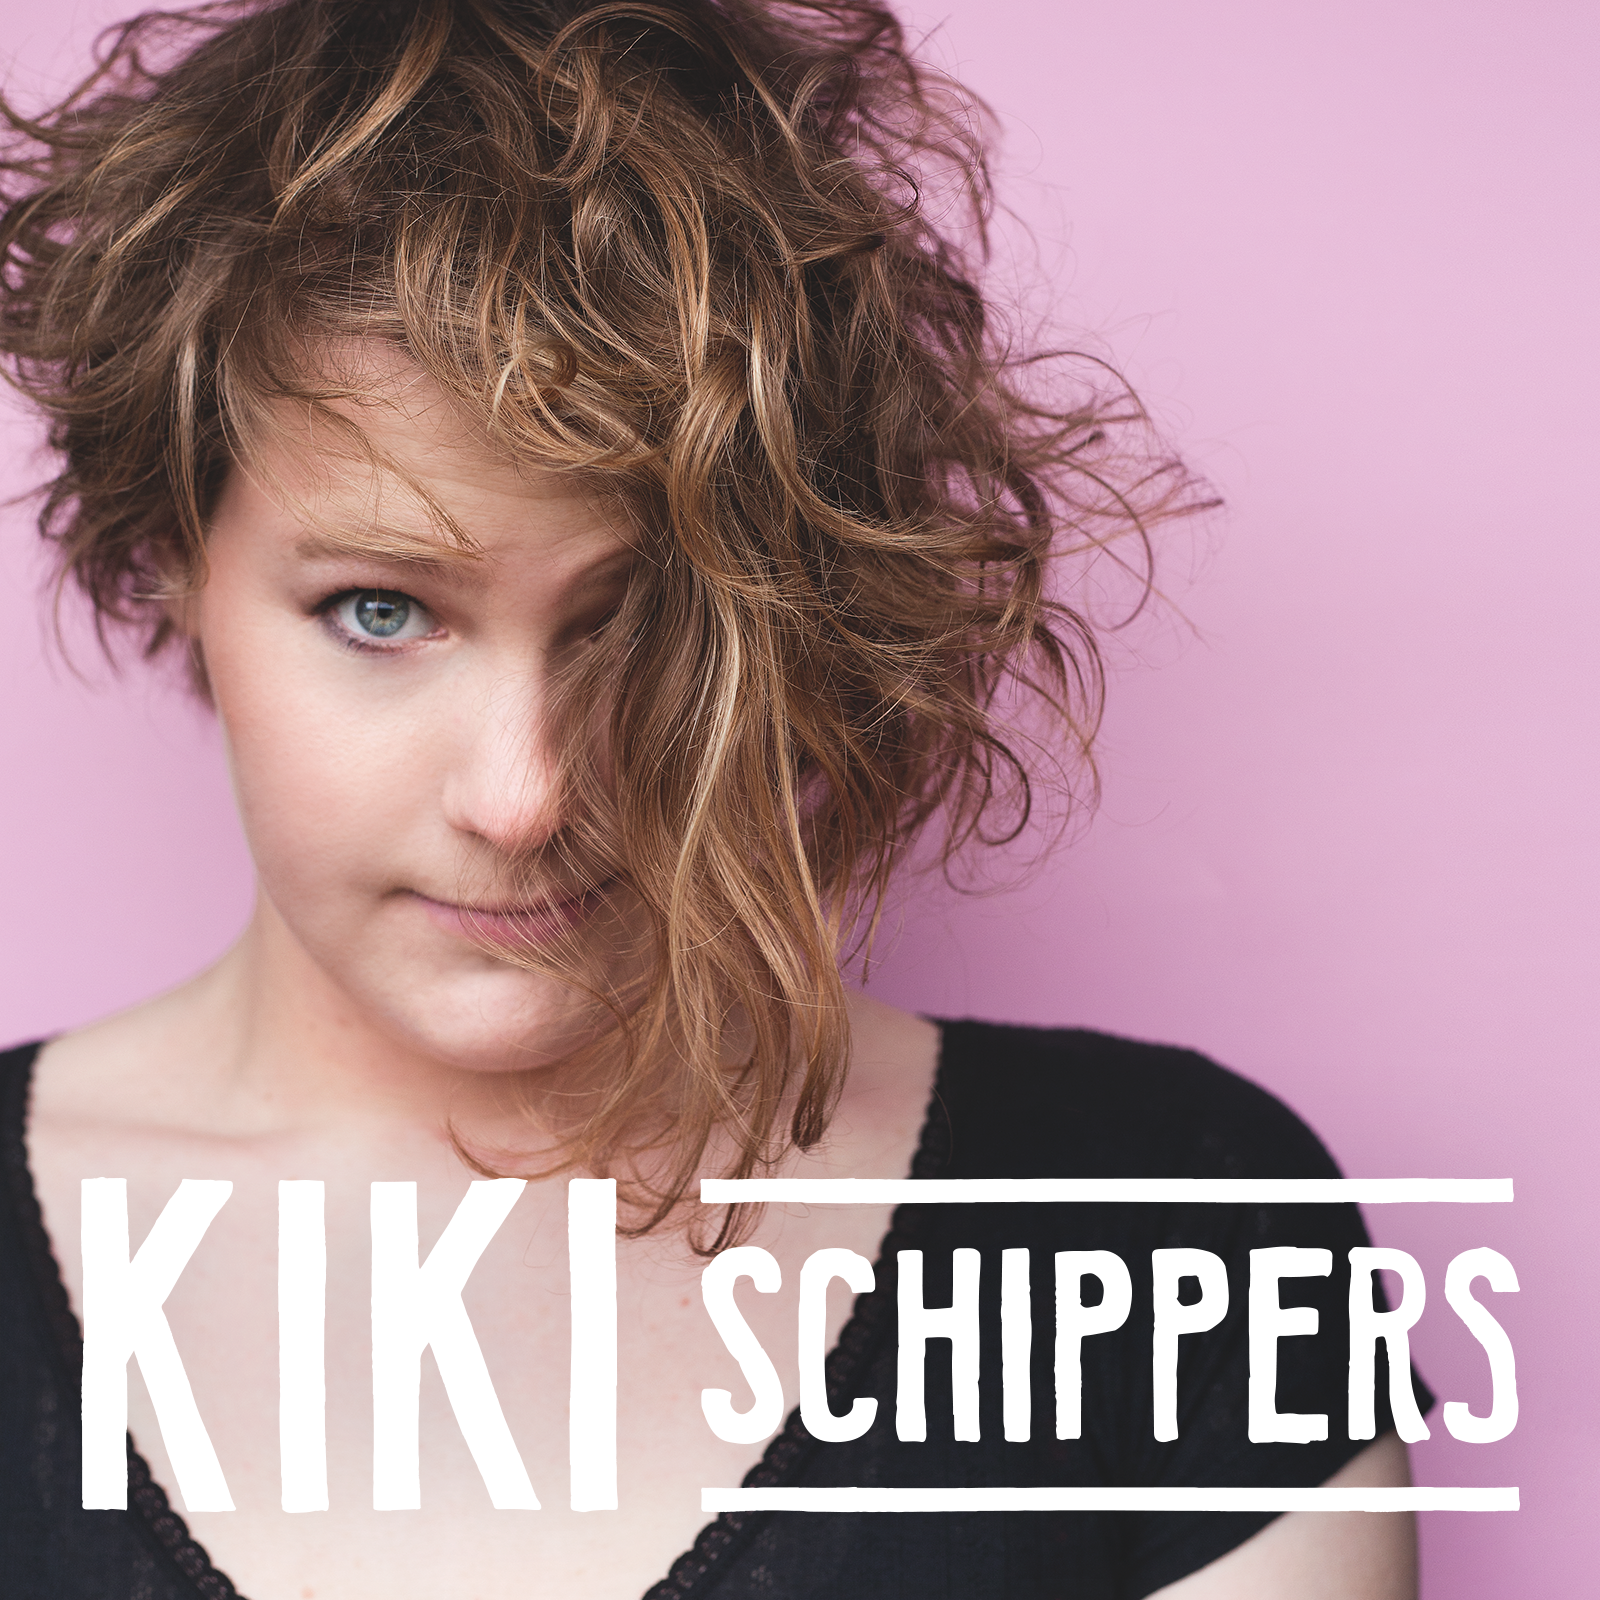 Kiki Schippers